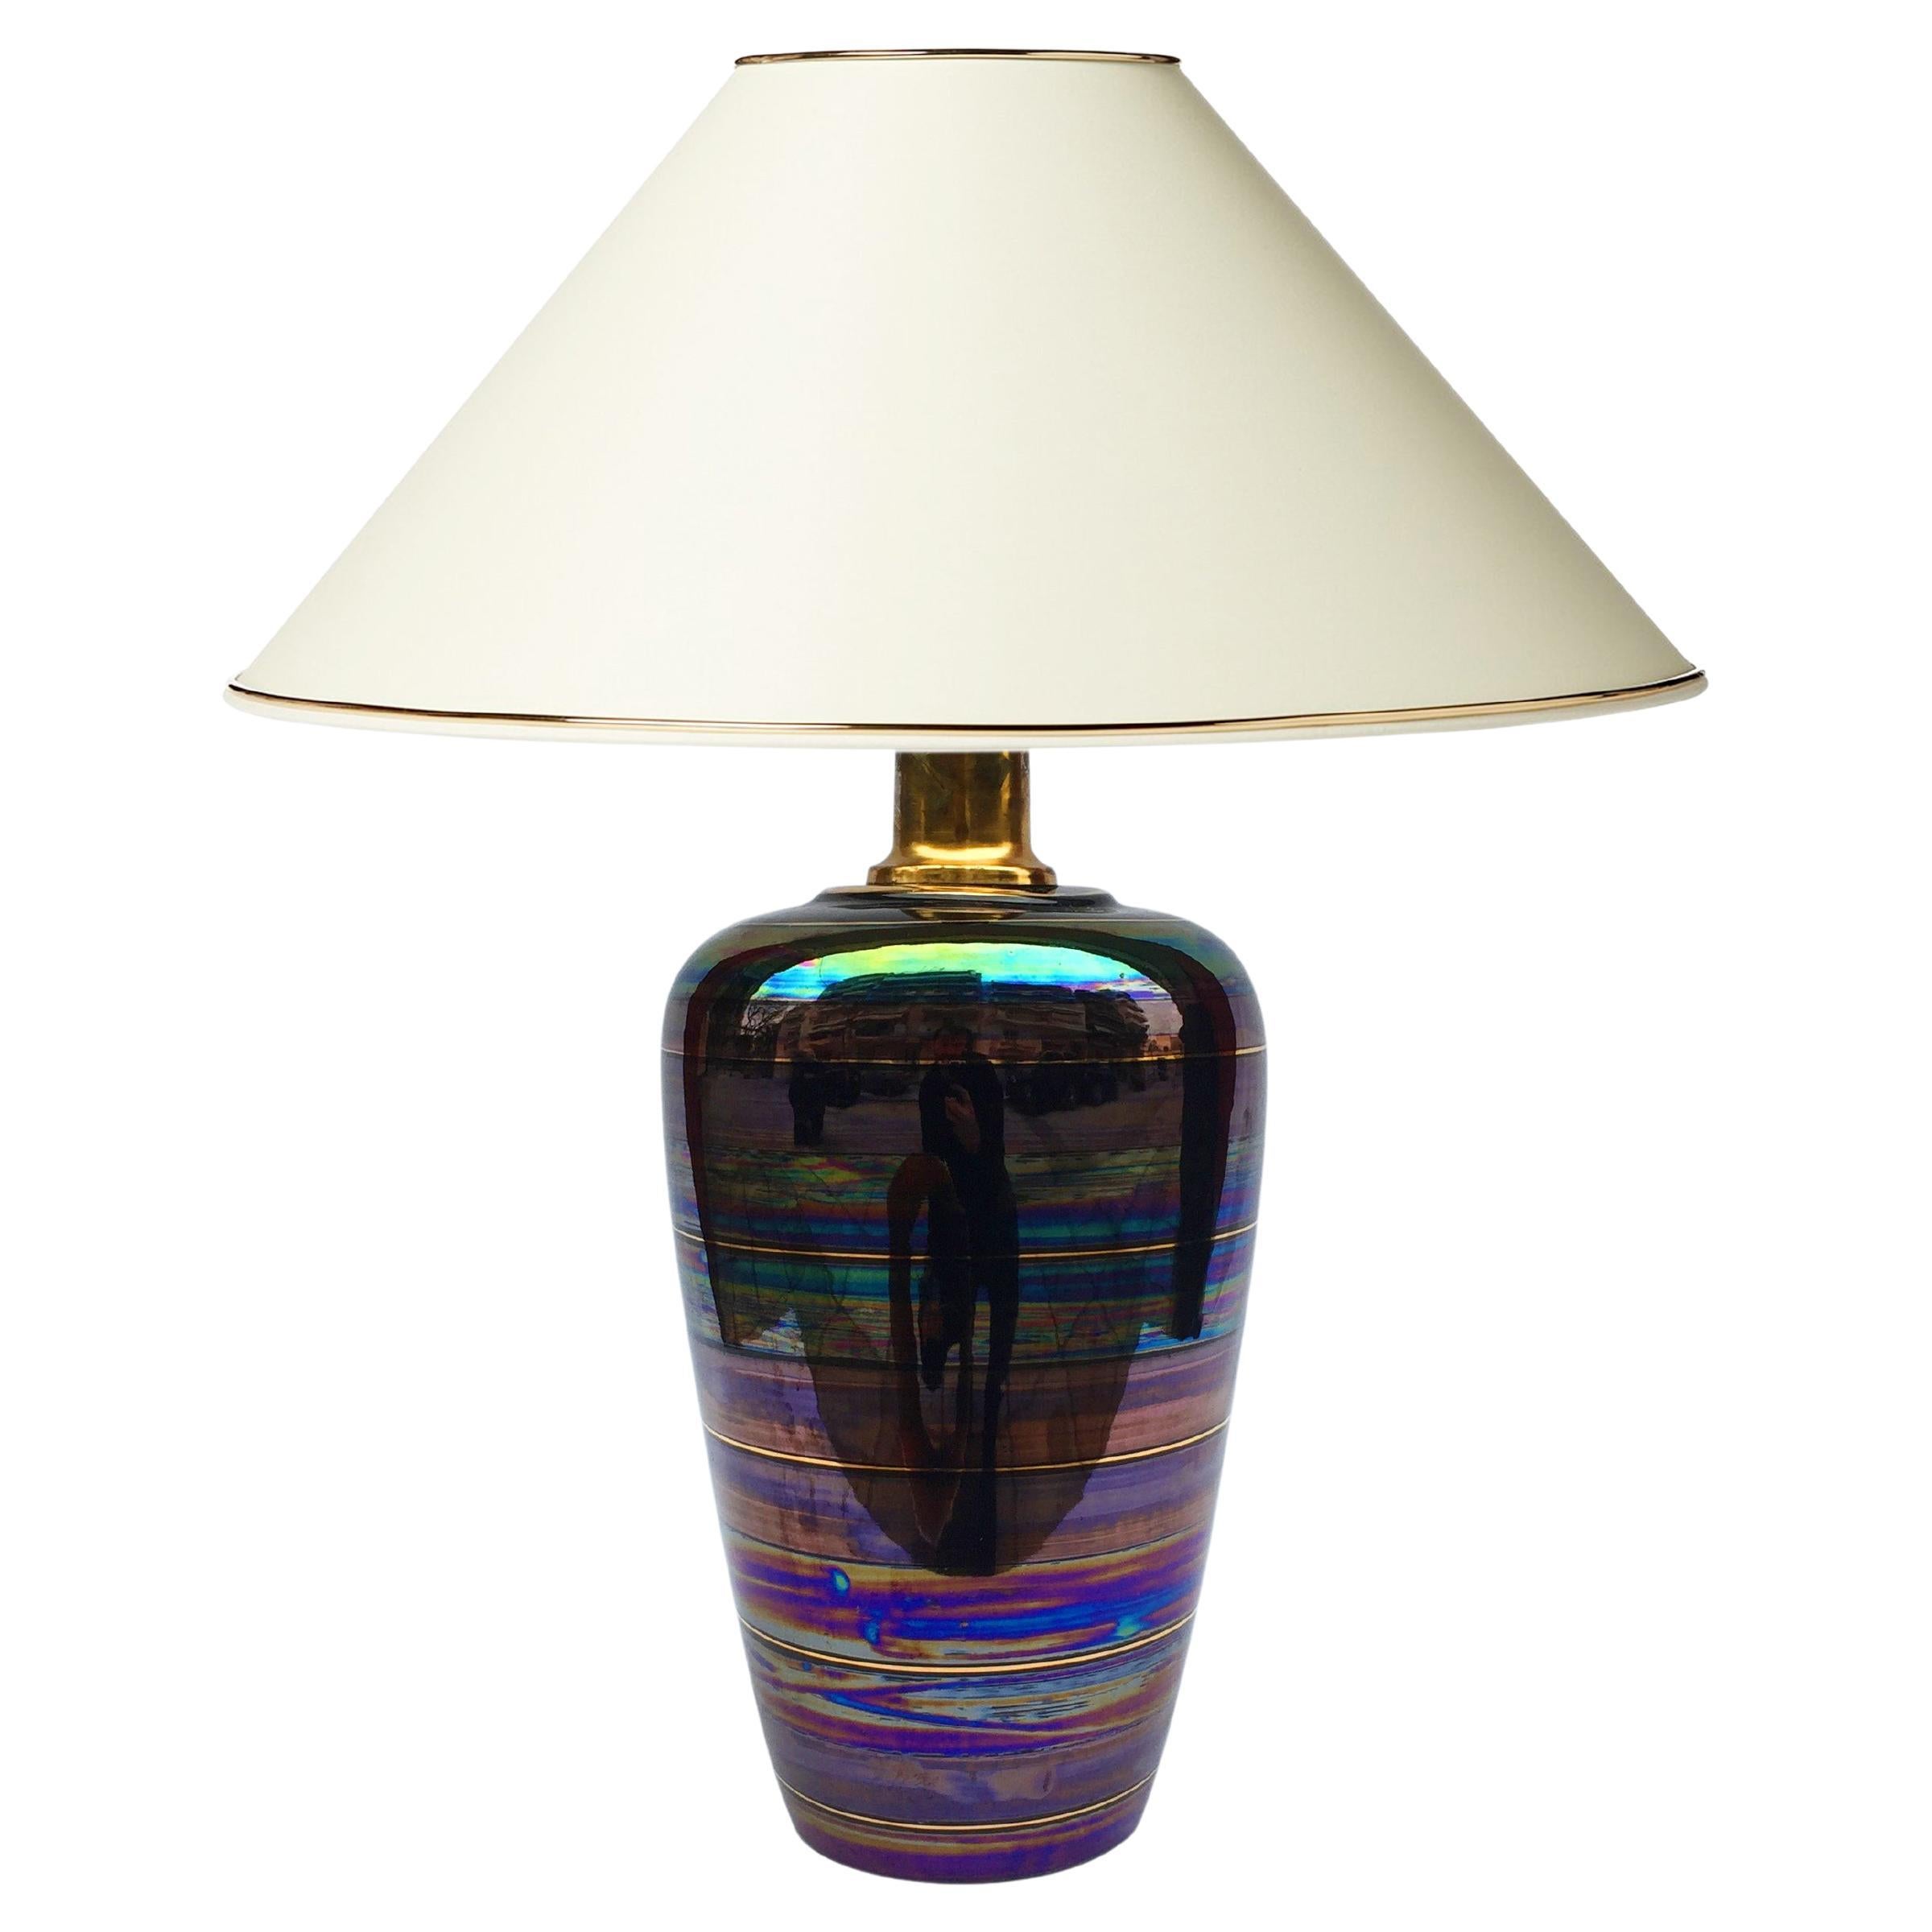 Iridescent Ceramic Table Lamp 1970s Art Nouveau Style Manner of Johann Loetz For Sale